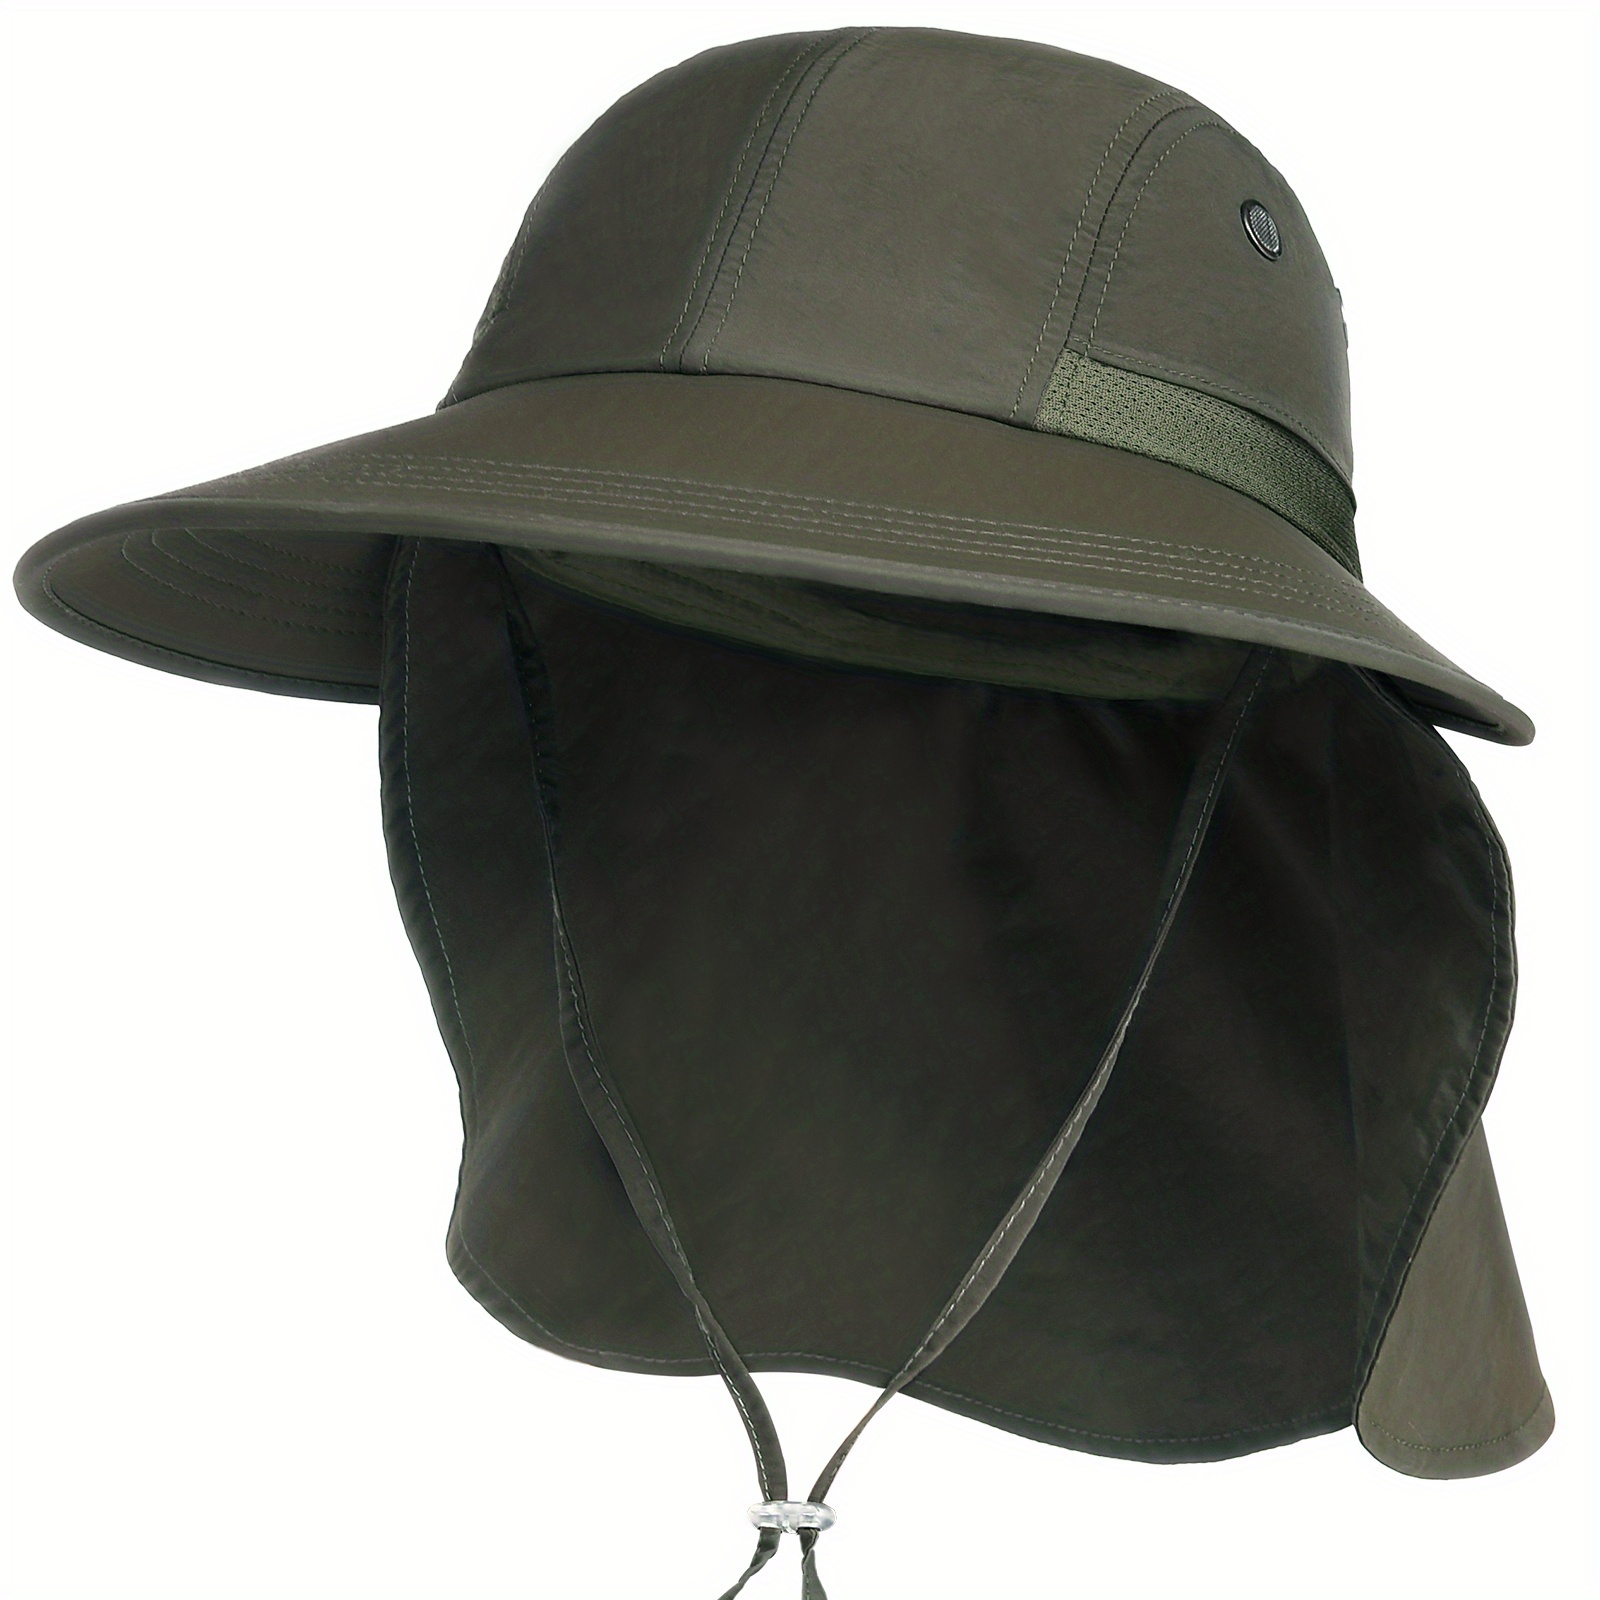 Tough Headwear Bucket Hats For Men - Fishing Hat - Mens Beach Hat - Bucket Hat For Women - Beach Hats For Women - Sun Hats Green